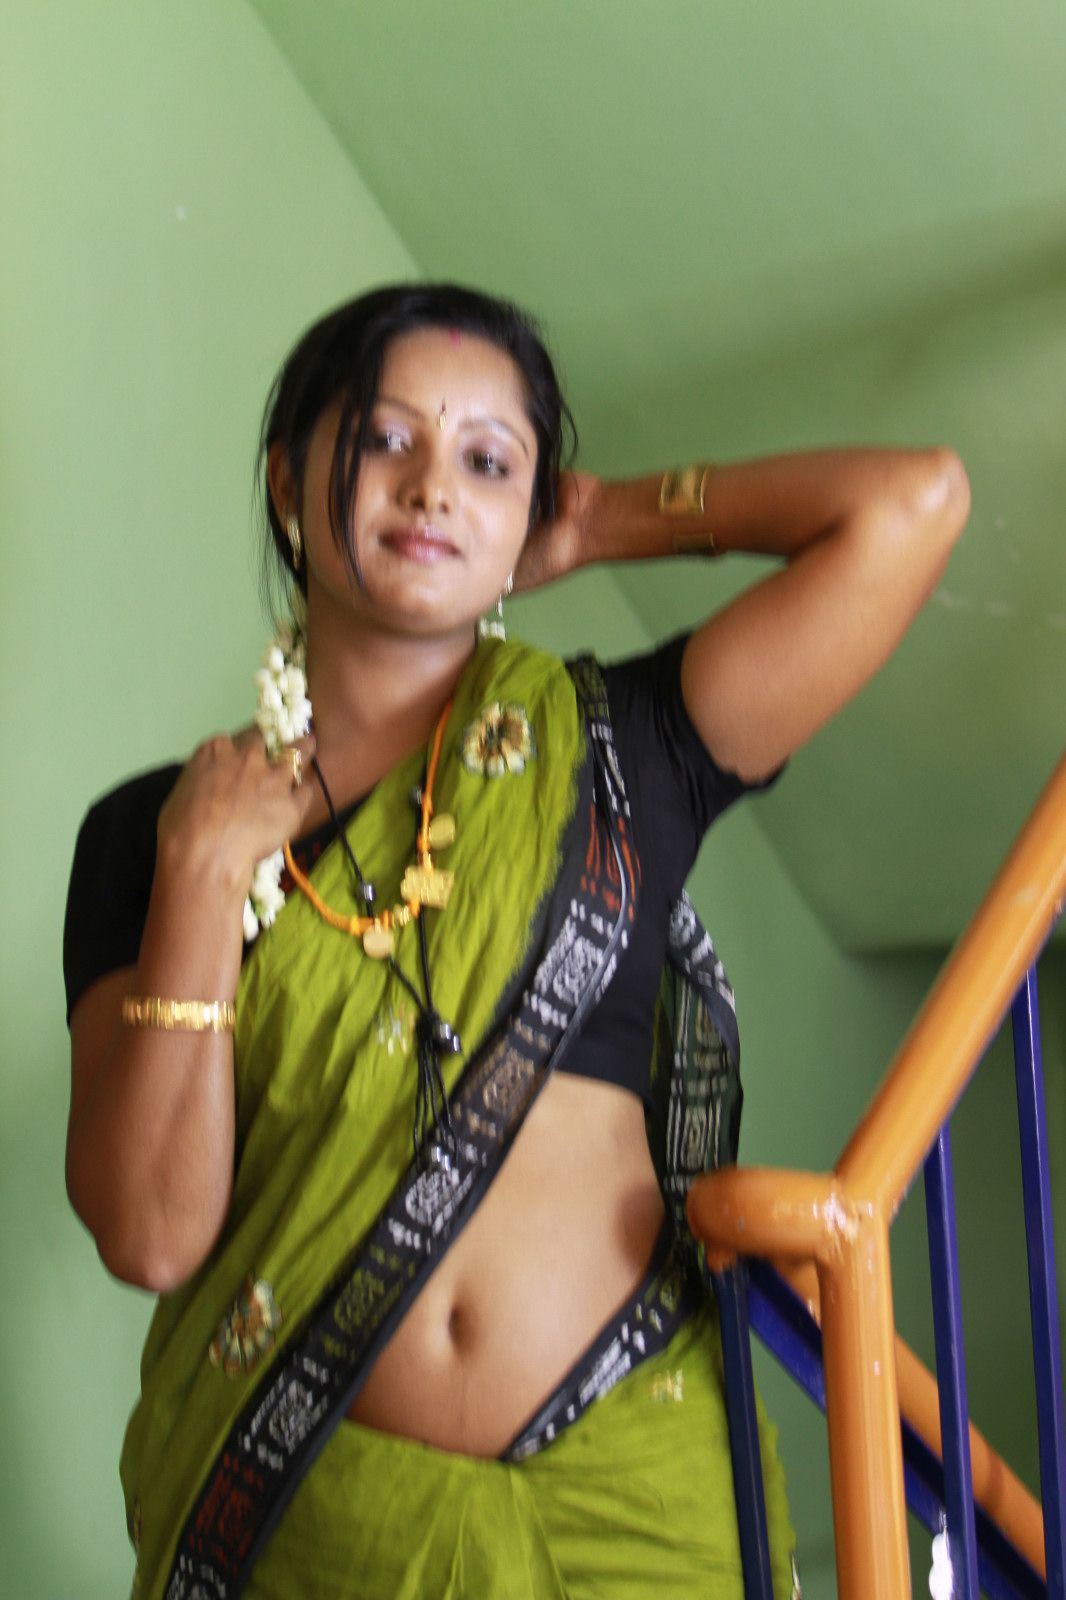 Indian b grade film nude pic fan photos